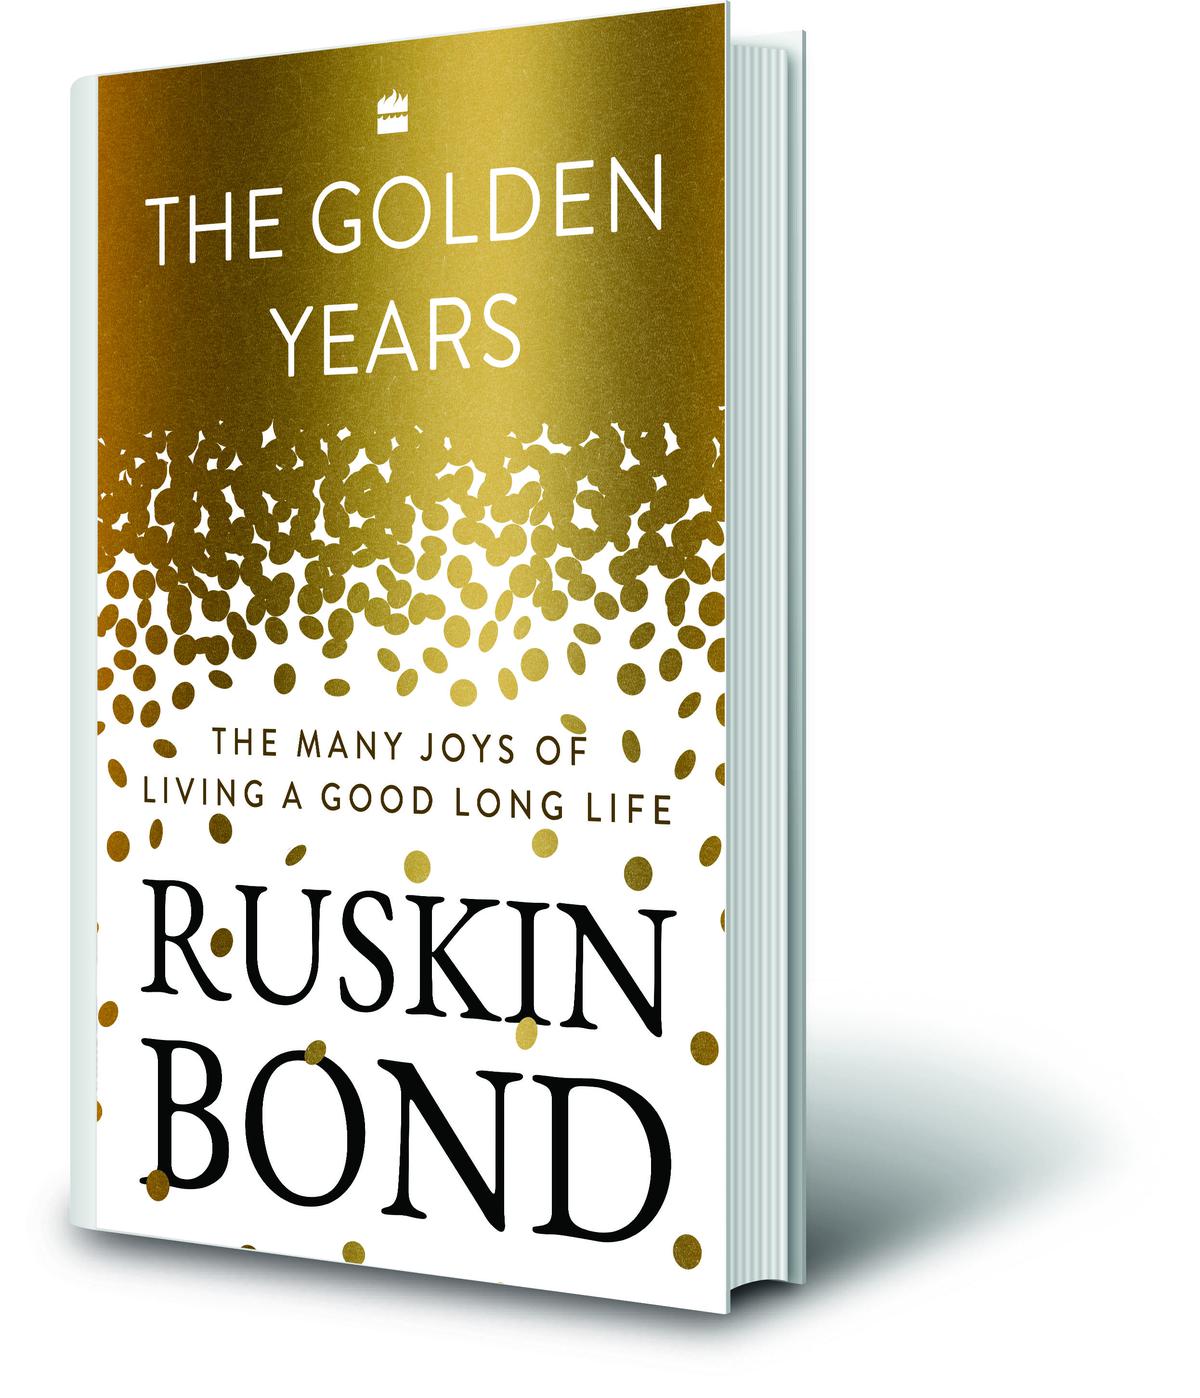 short book review of ruskin bond